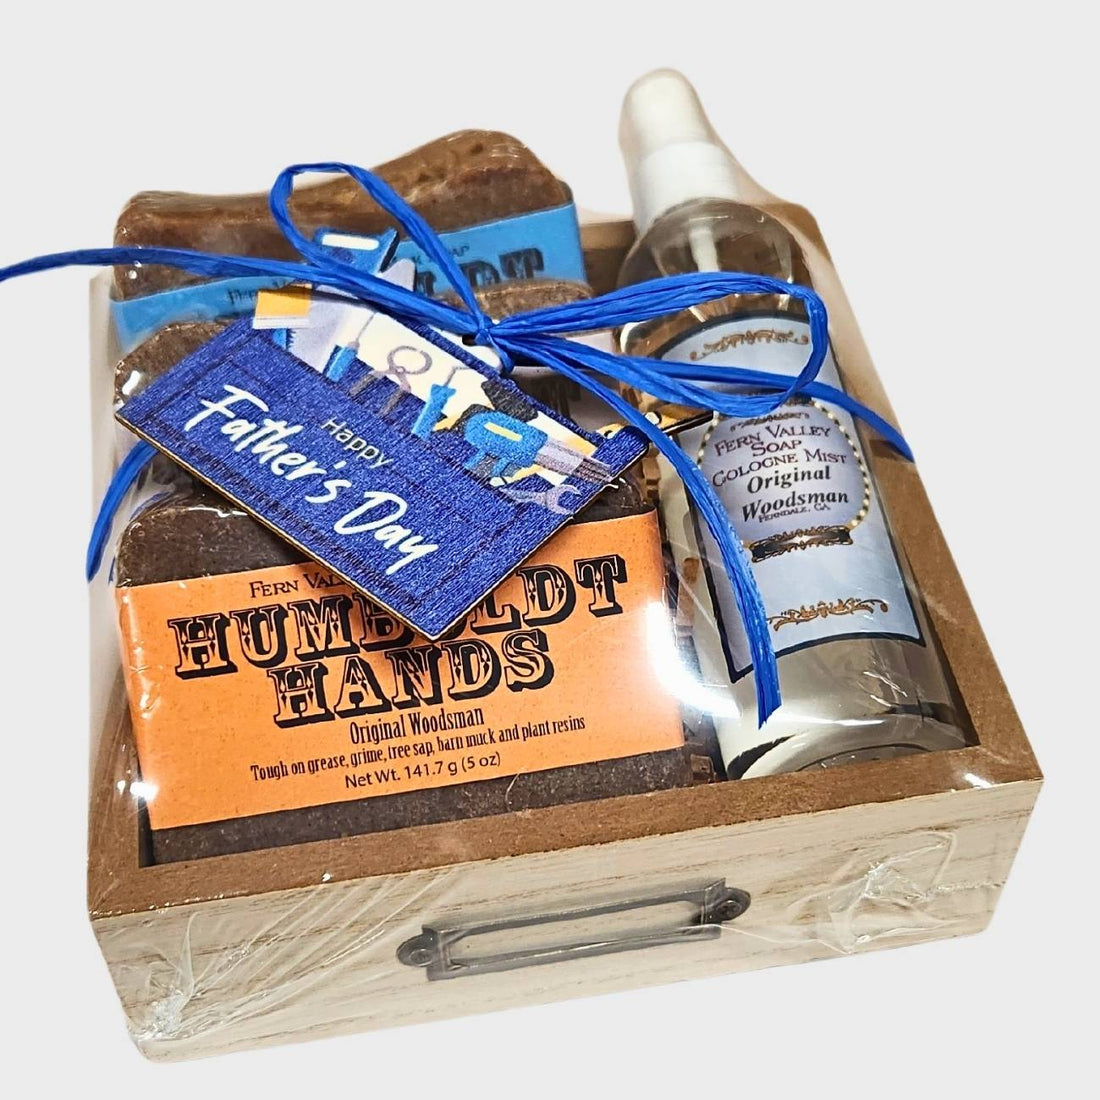 Handmade Goat Milk Soaps | Humboldt Hands | Soap + Cologne Gift Crate